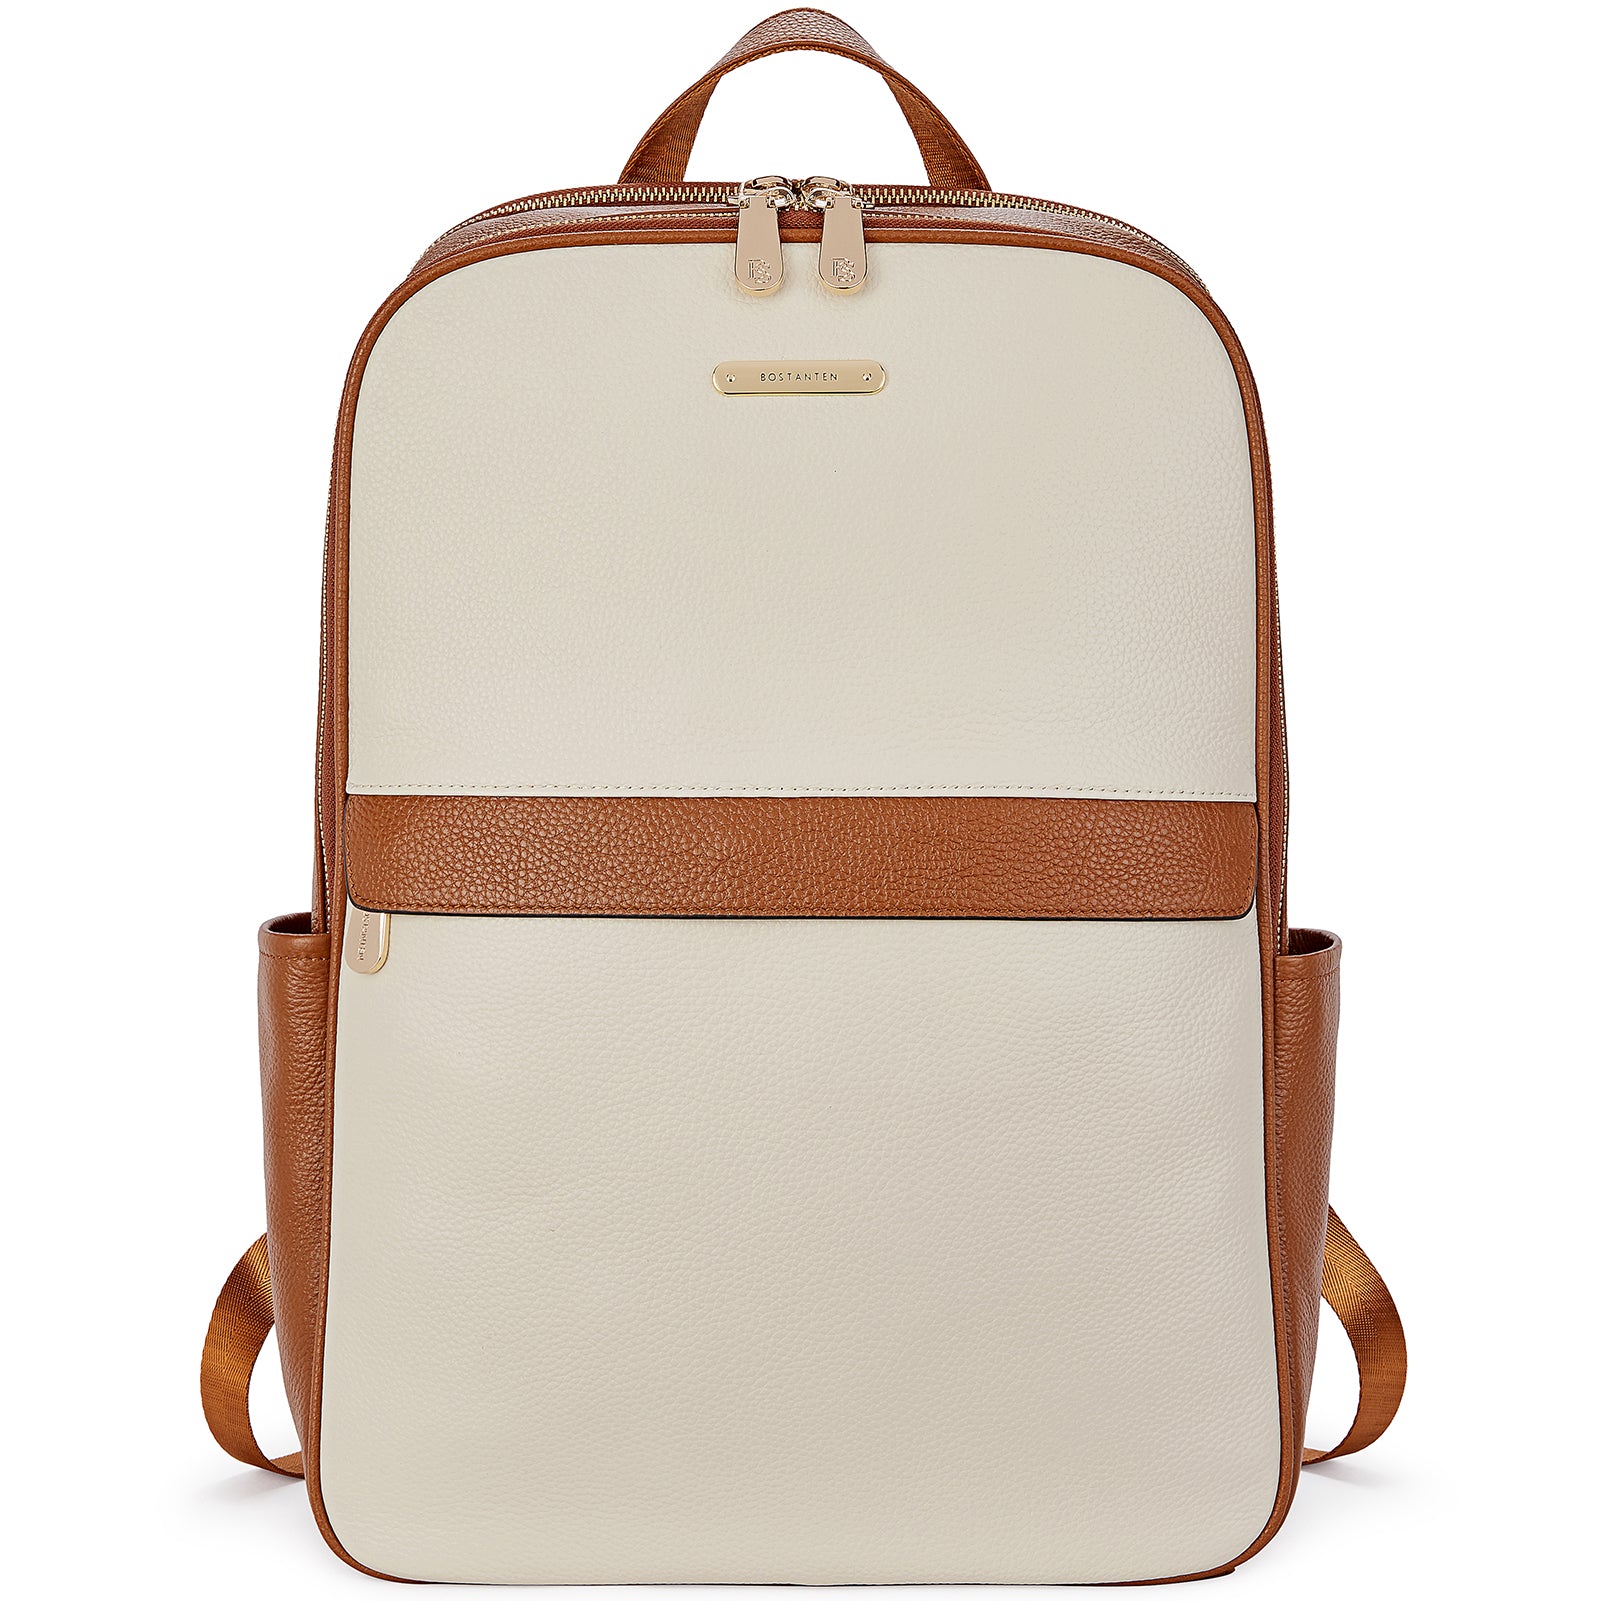 Guess Logo Women's Backpack Purse Tan/Beige/Brown Faux Leather - 12 x 12 x  5 | eBay